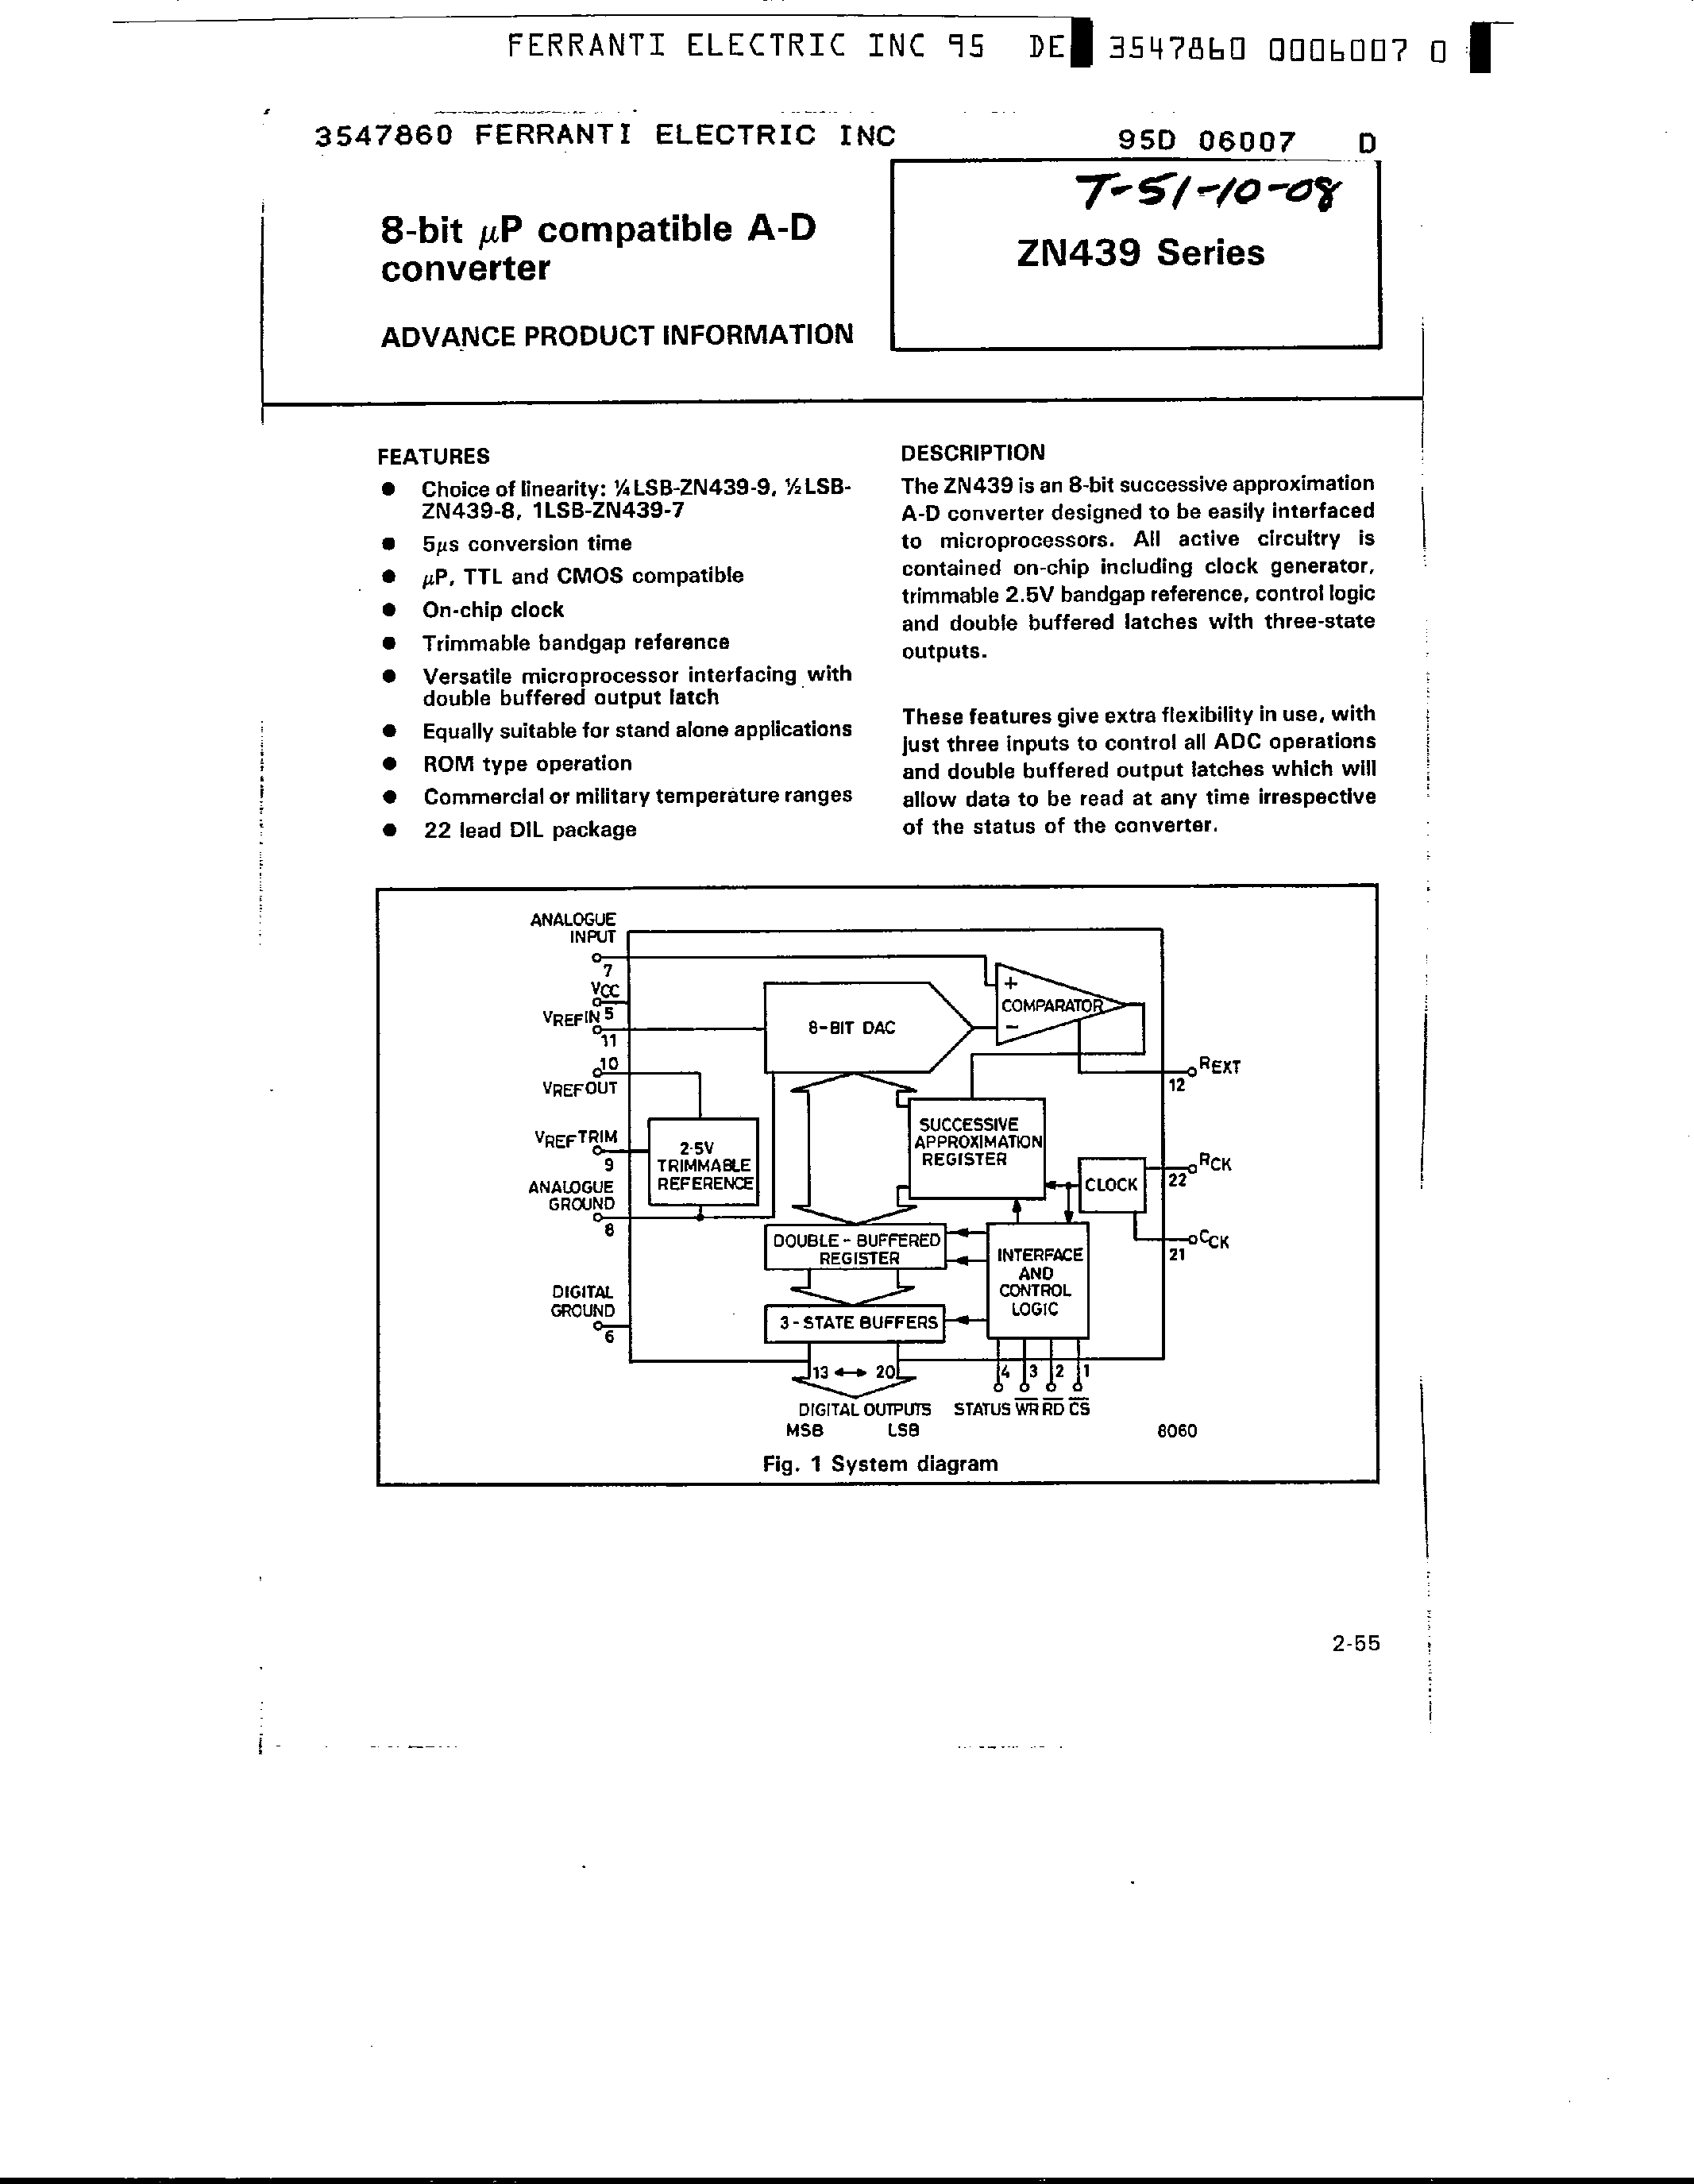 Даташит ZN439 - 8 bit Microprocessor Compatible A-D Converter страница 1